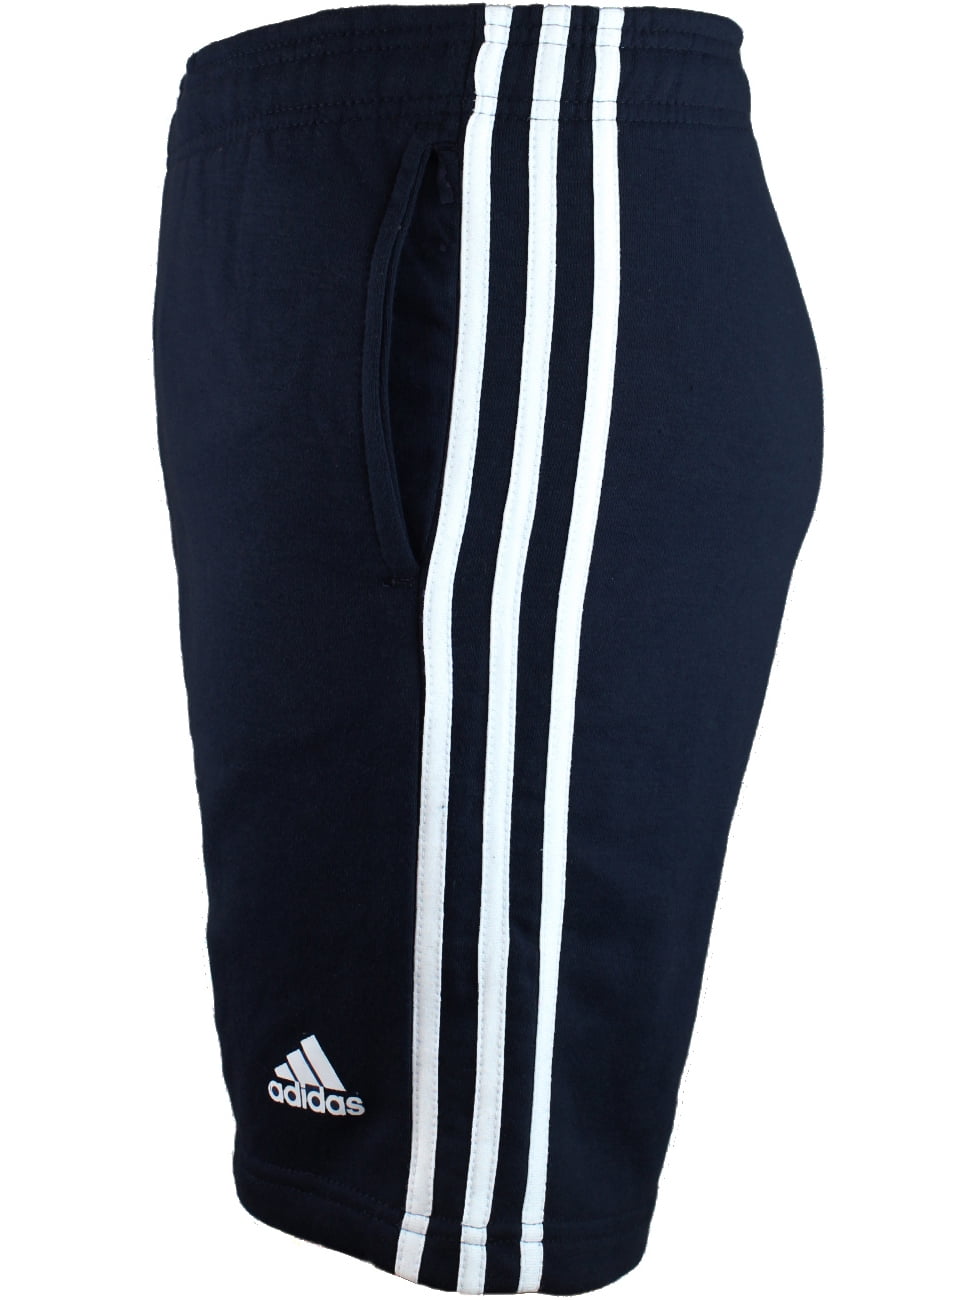 Adidas - Adidas Men's Shorts BP5467 ESS 